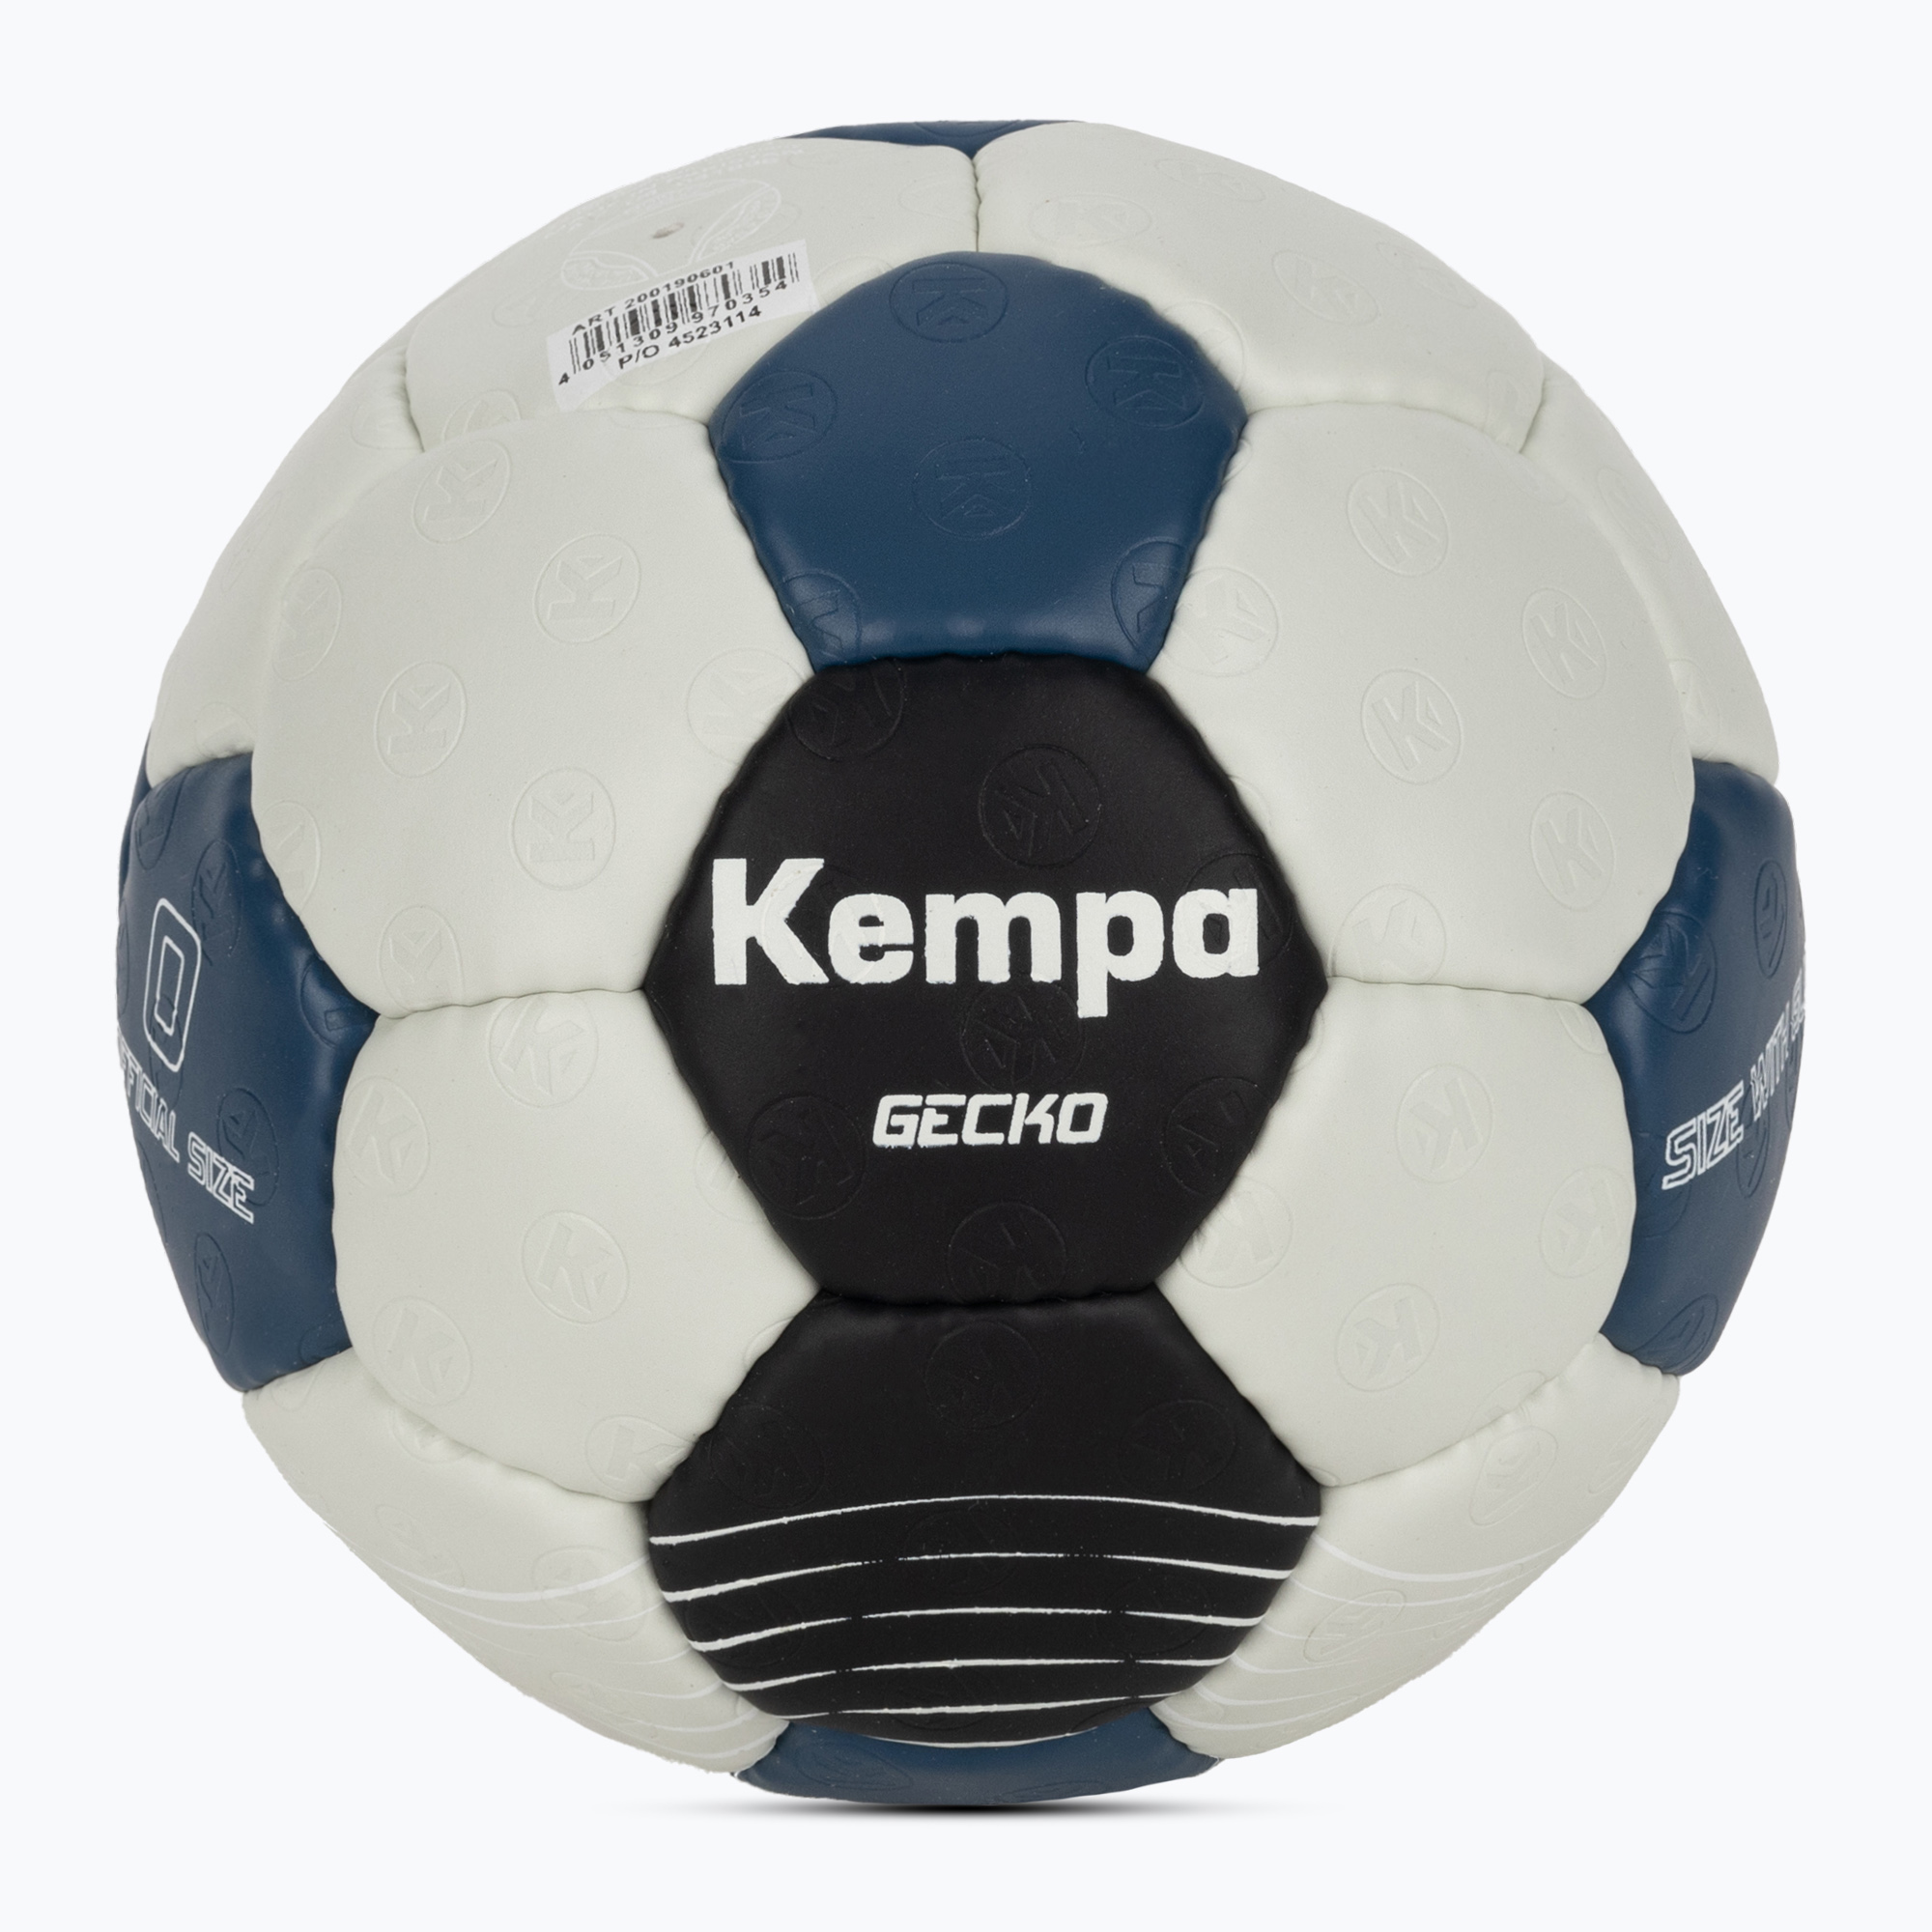 Kempa Gecko handball 200190601/0 размер 0